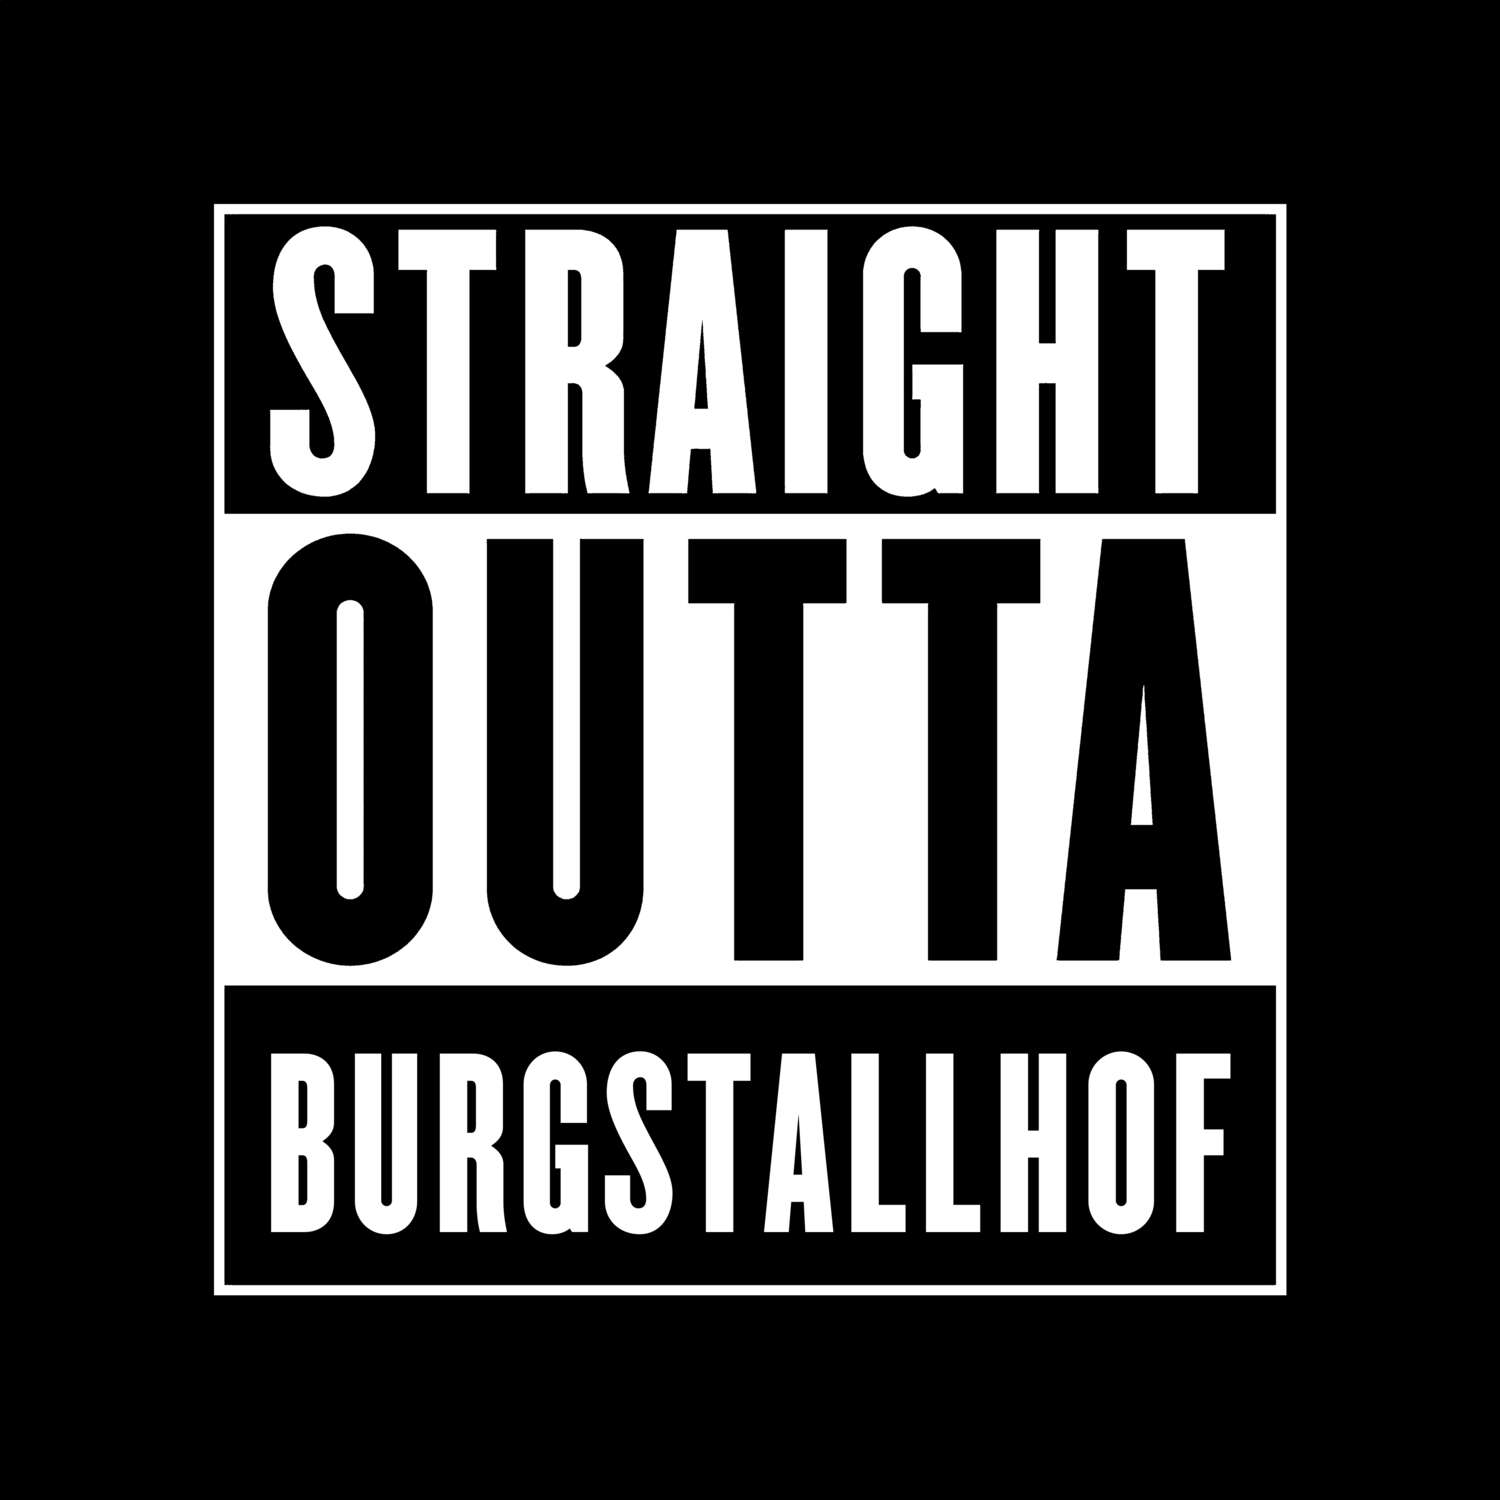 Burgstallhof T-Shirt »Straight Outta«